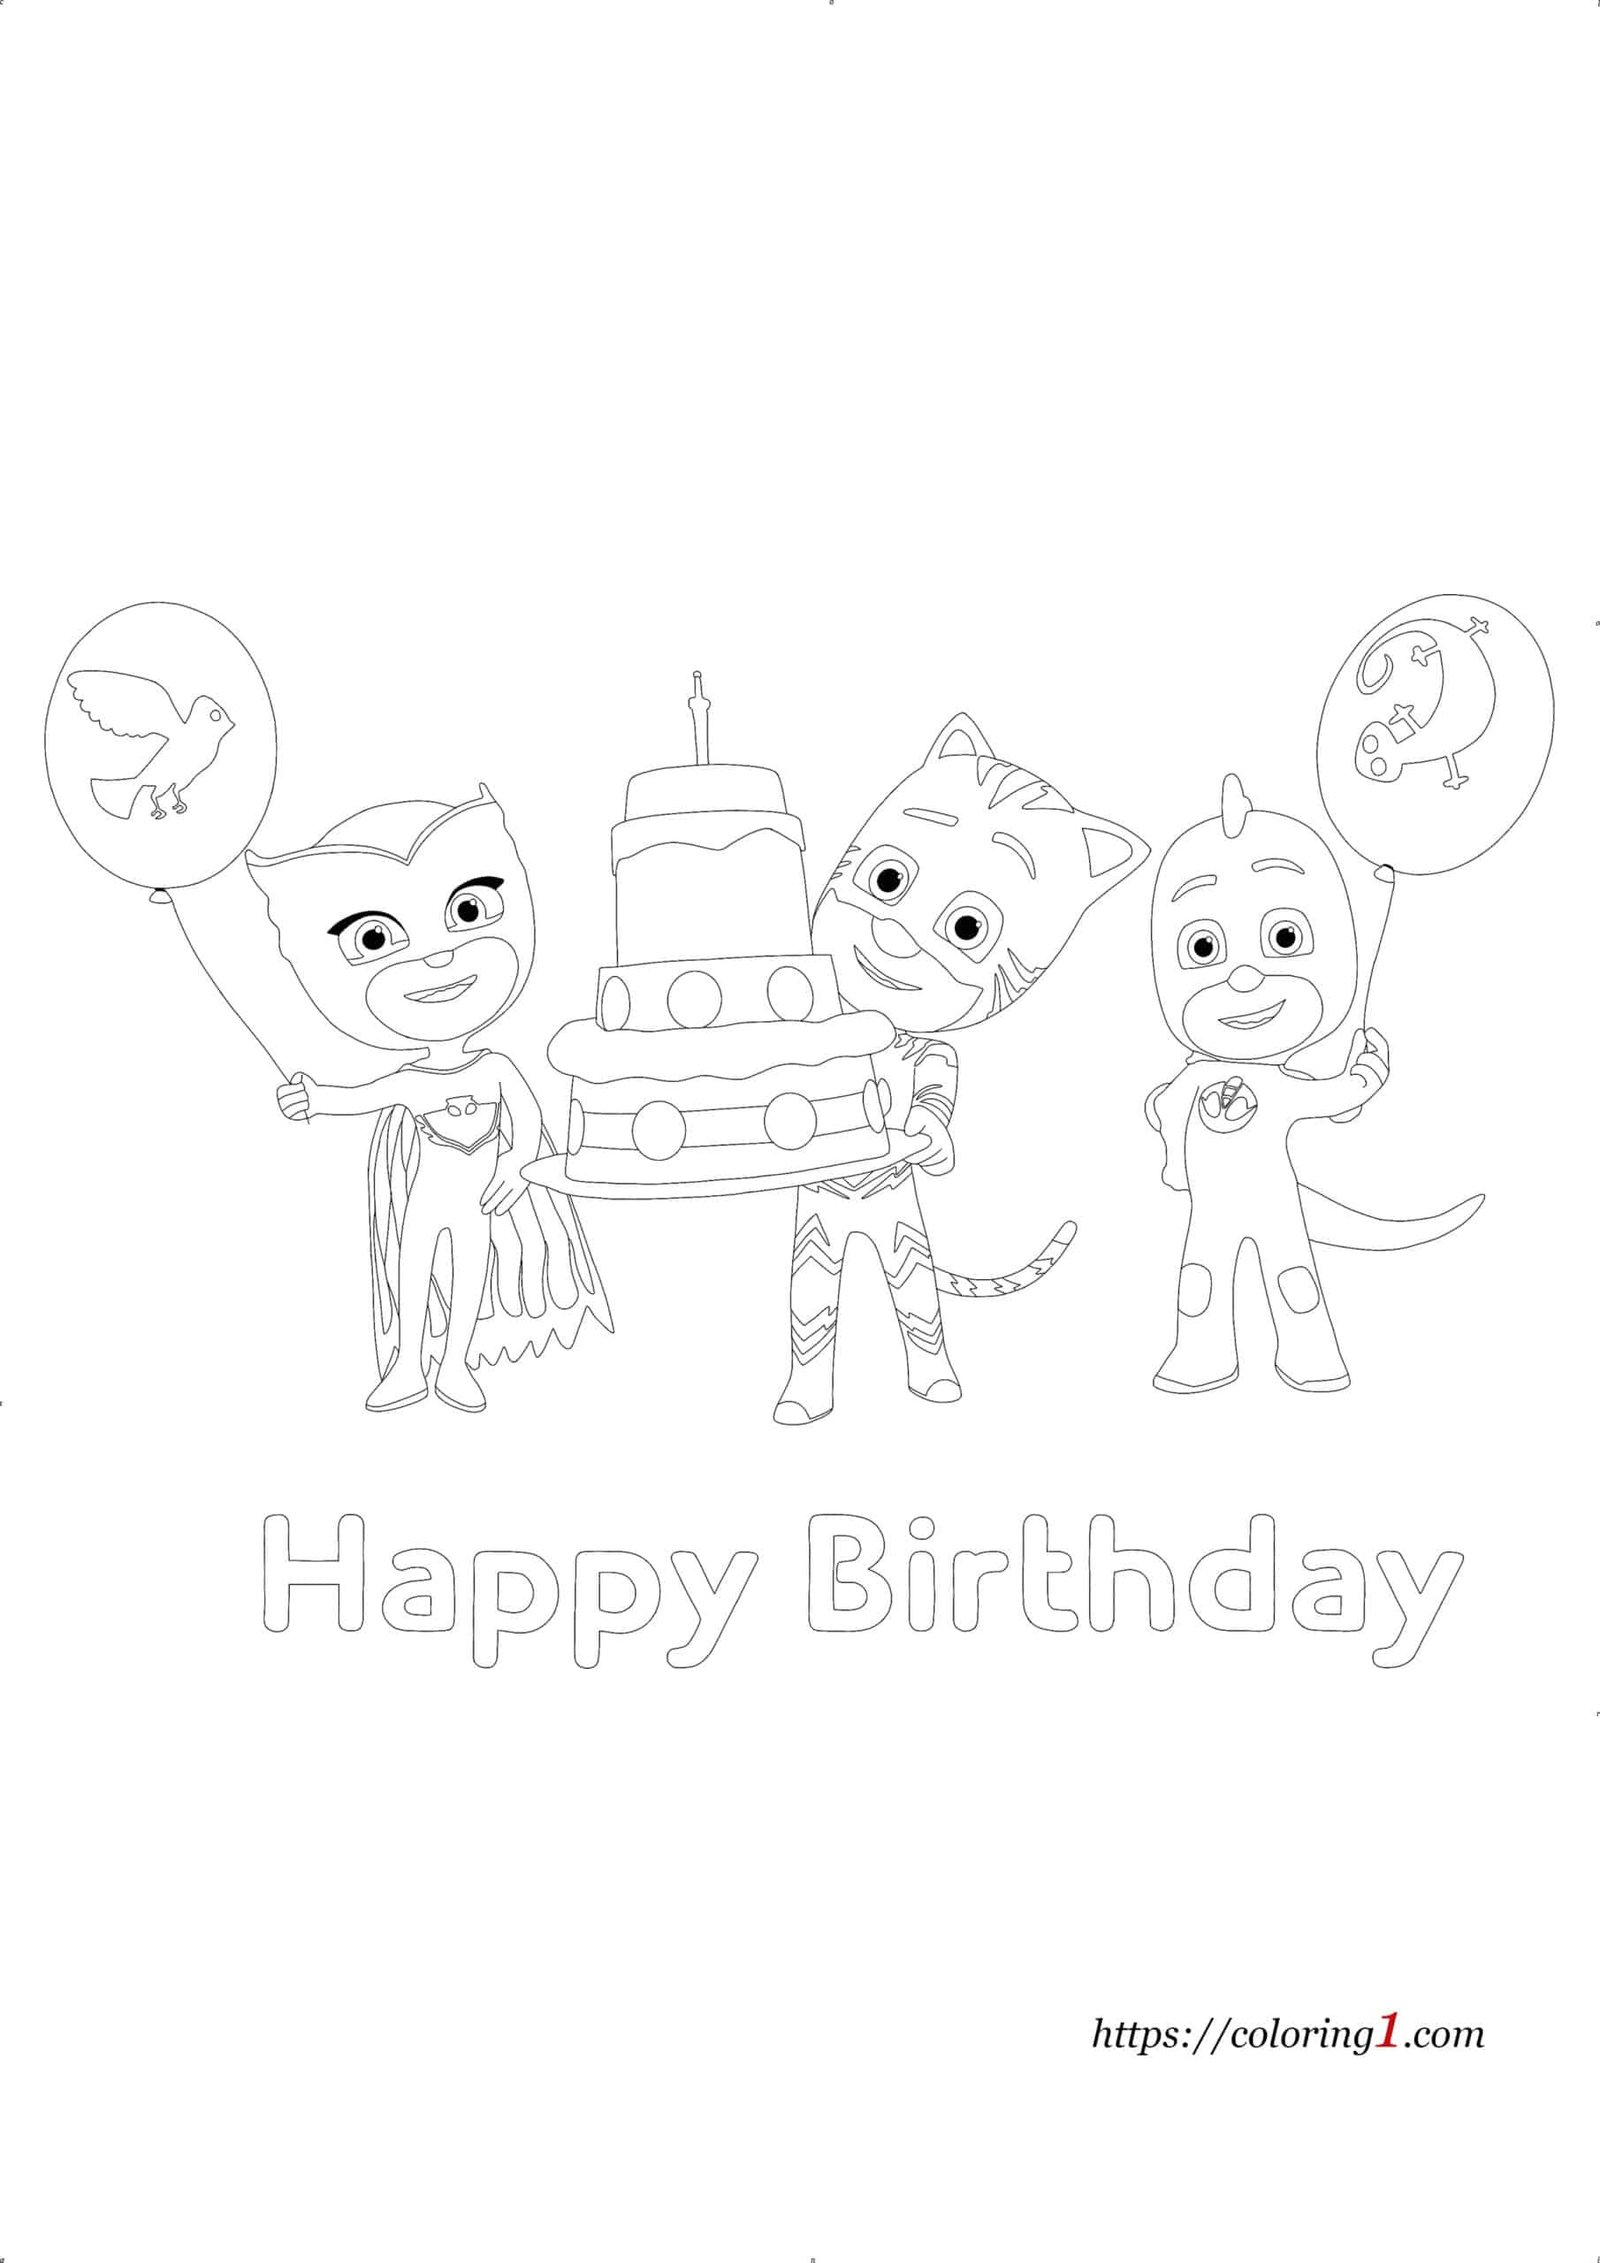 Pj Masks Happy Birthday coloring page